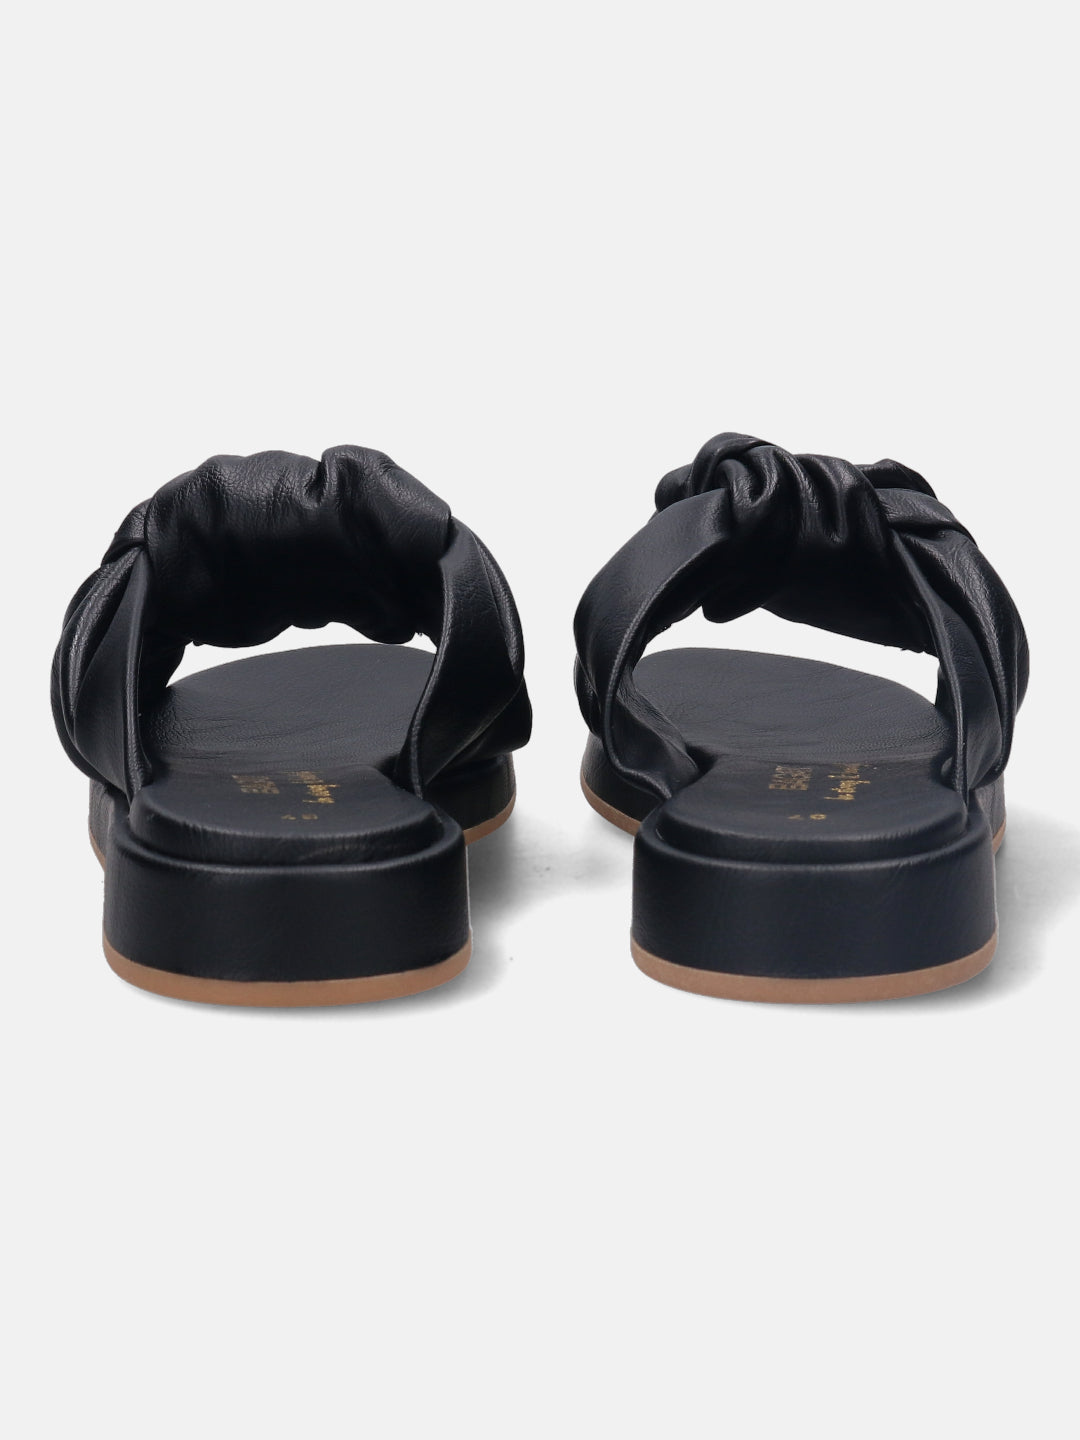 Ravenna Black Flat Sandals - BAGATT